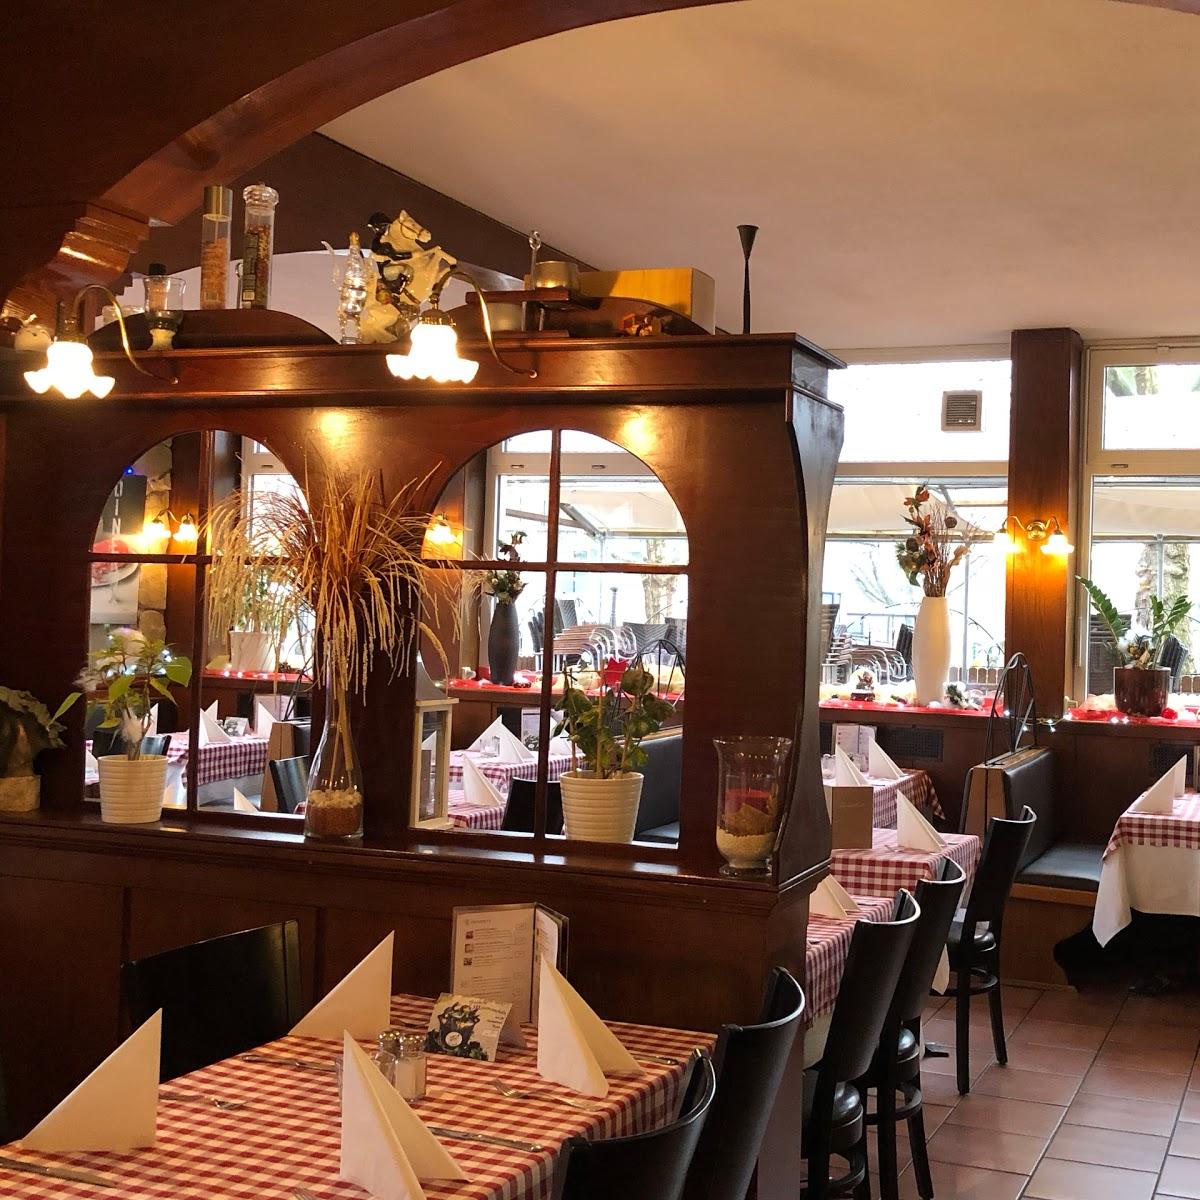 Restaurant "Ristorante Cavallino" in  Berlin